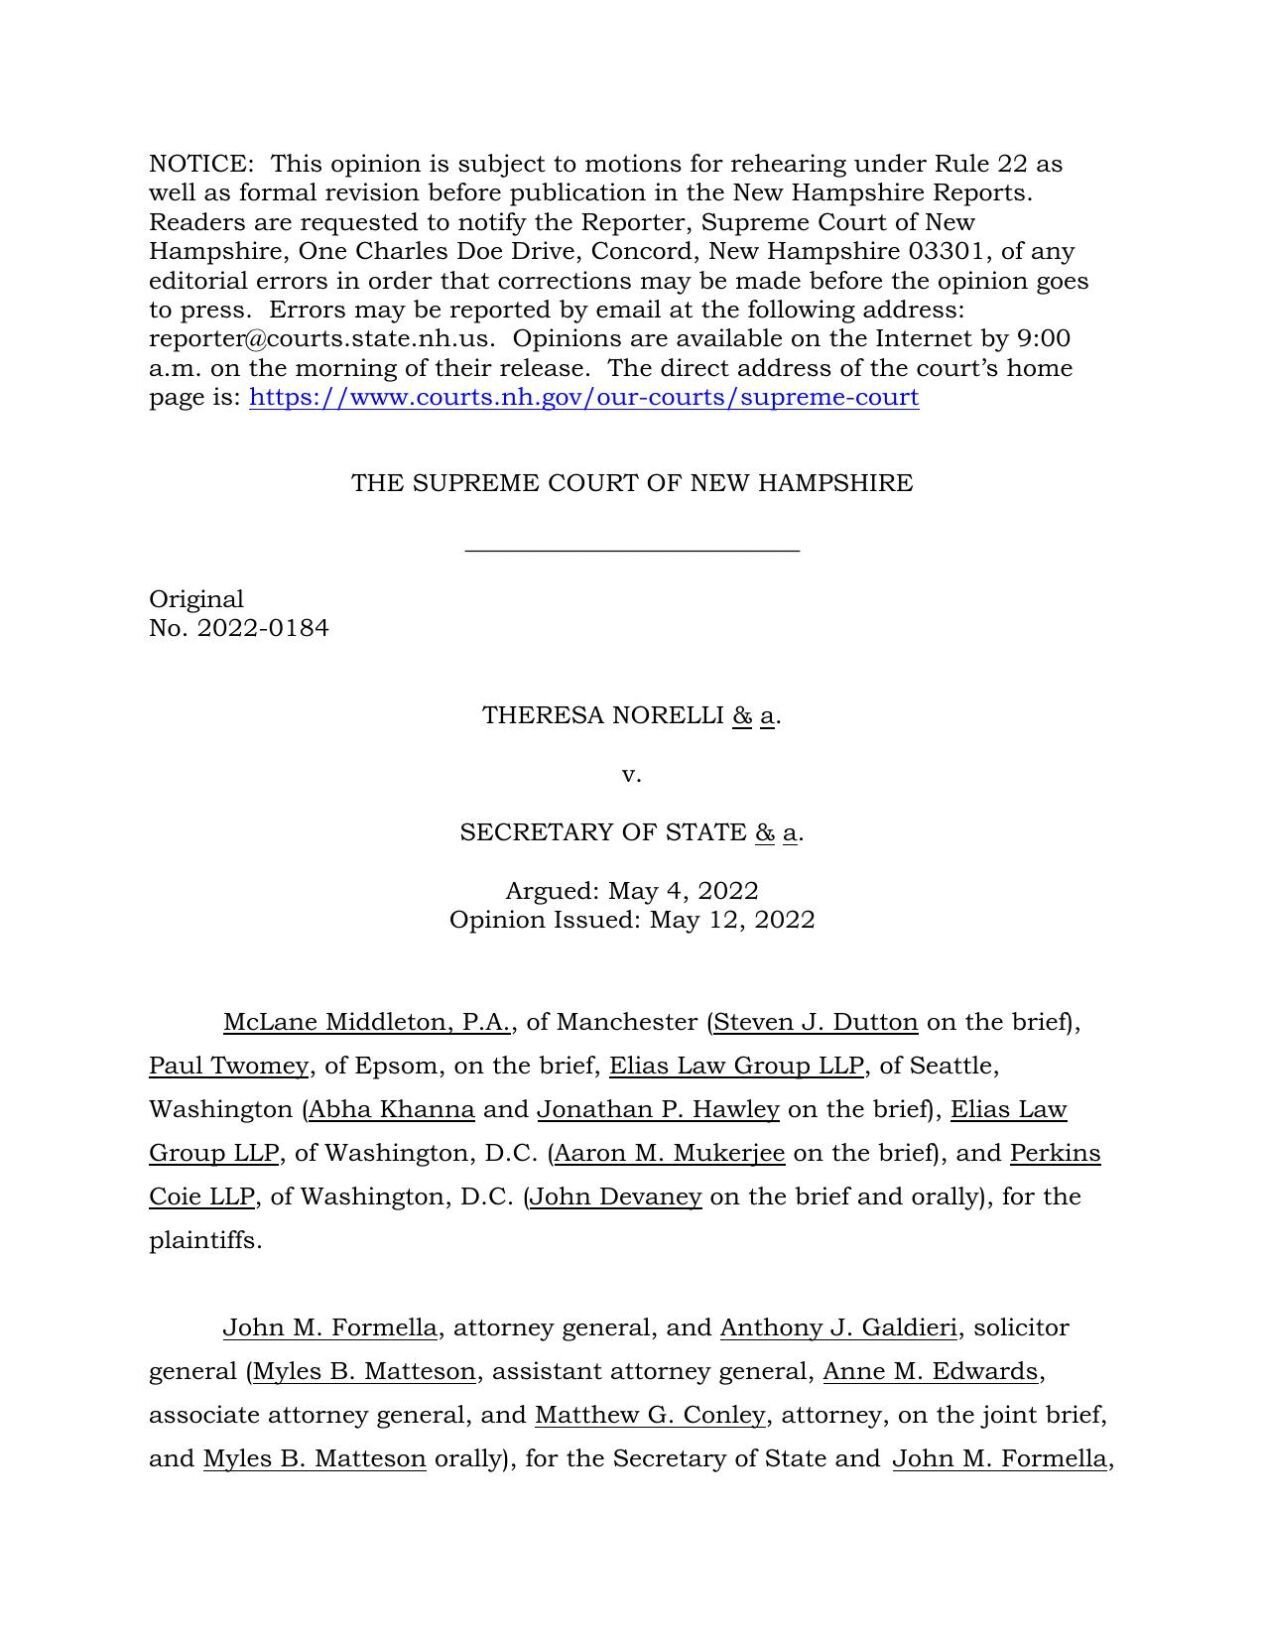 NH Supreme Court redistricting decision unionleader com